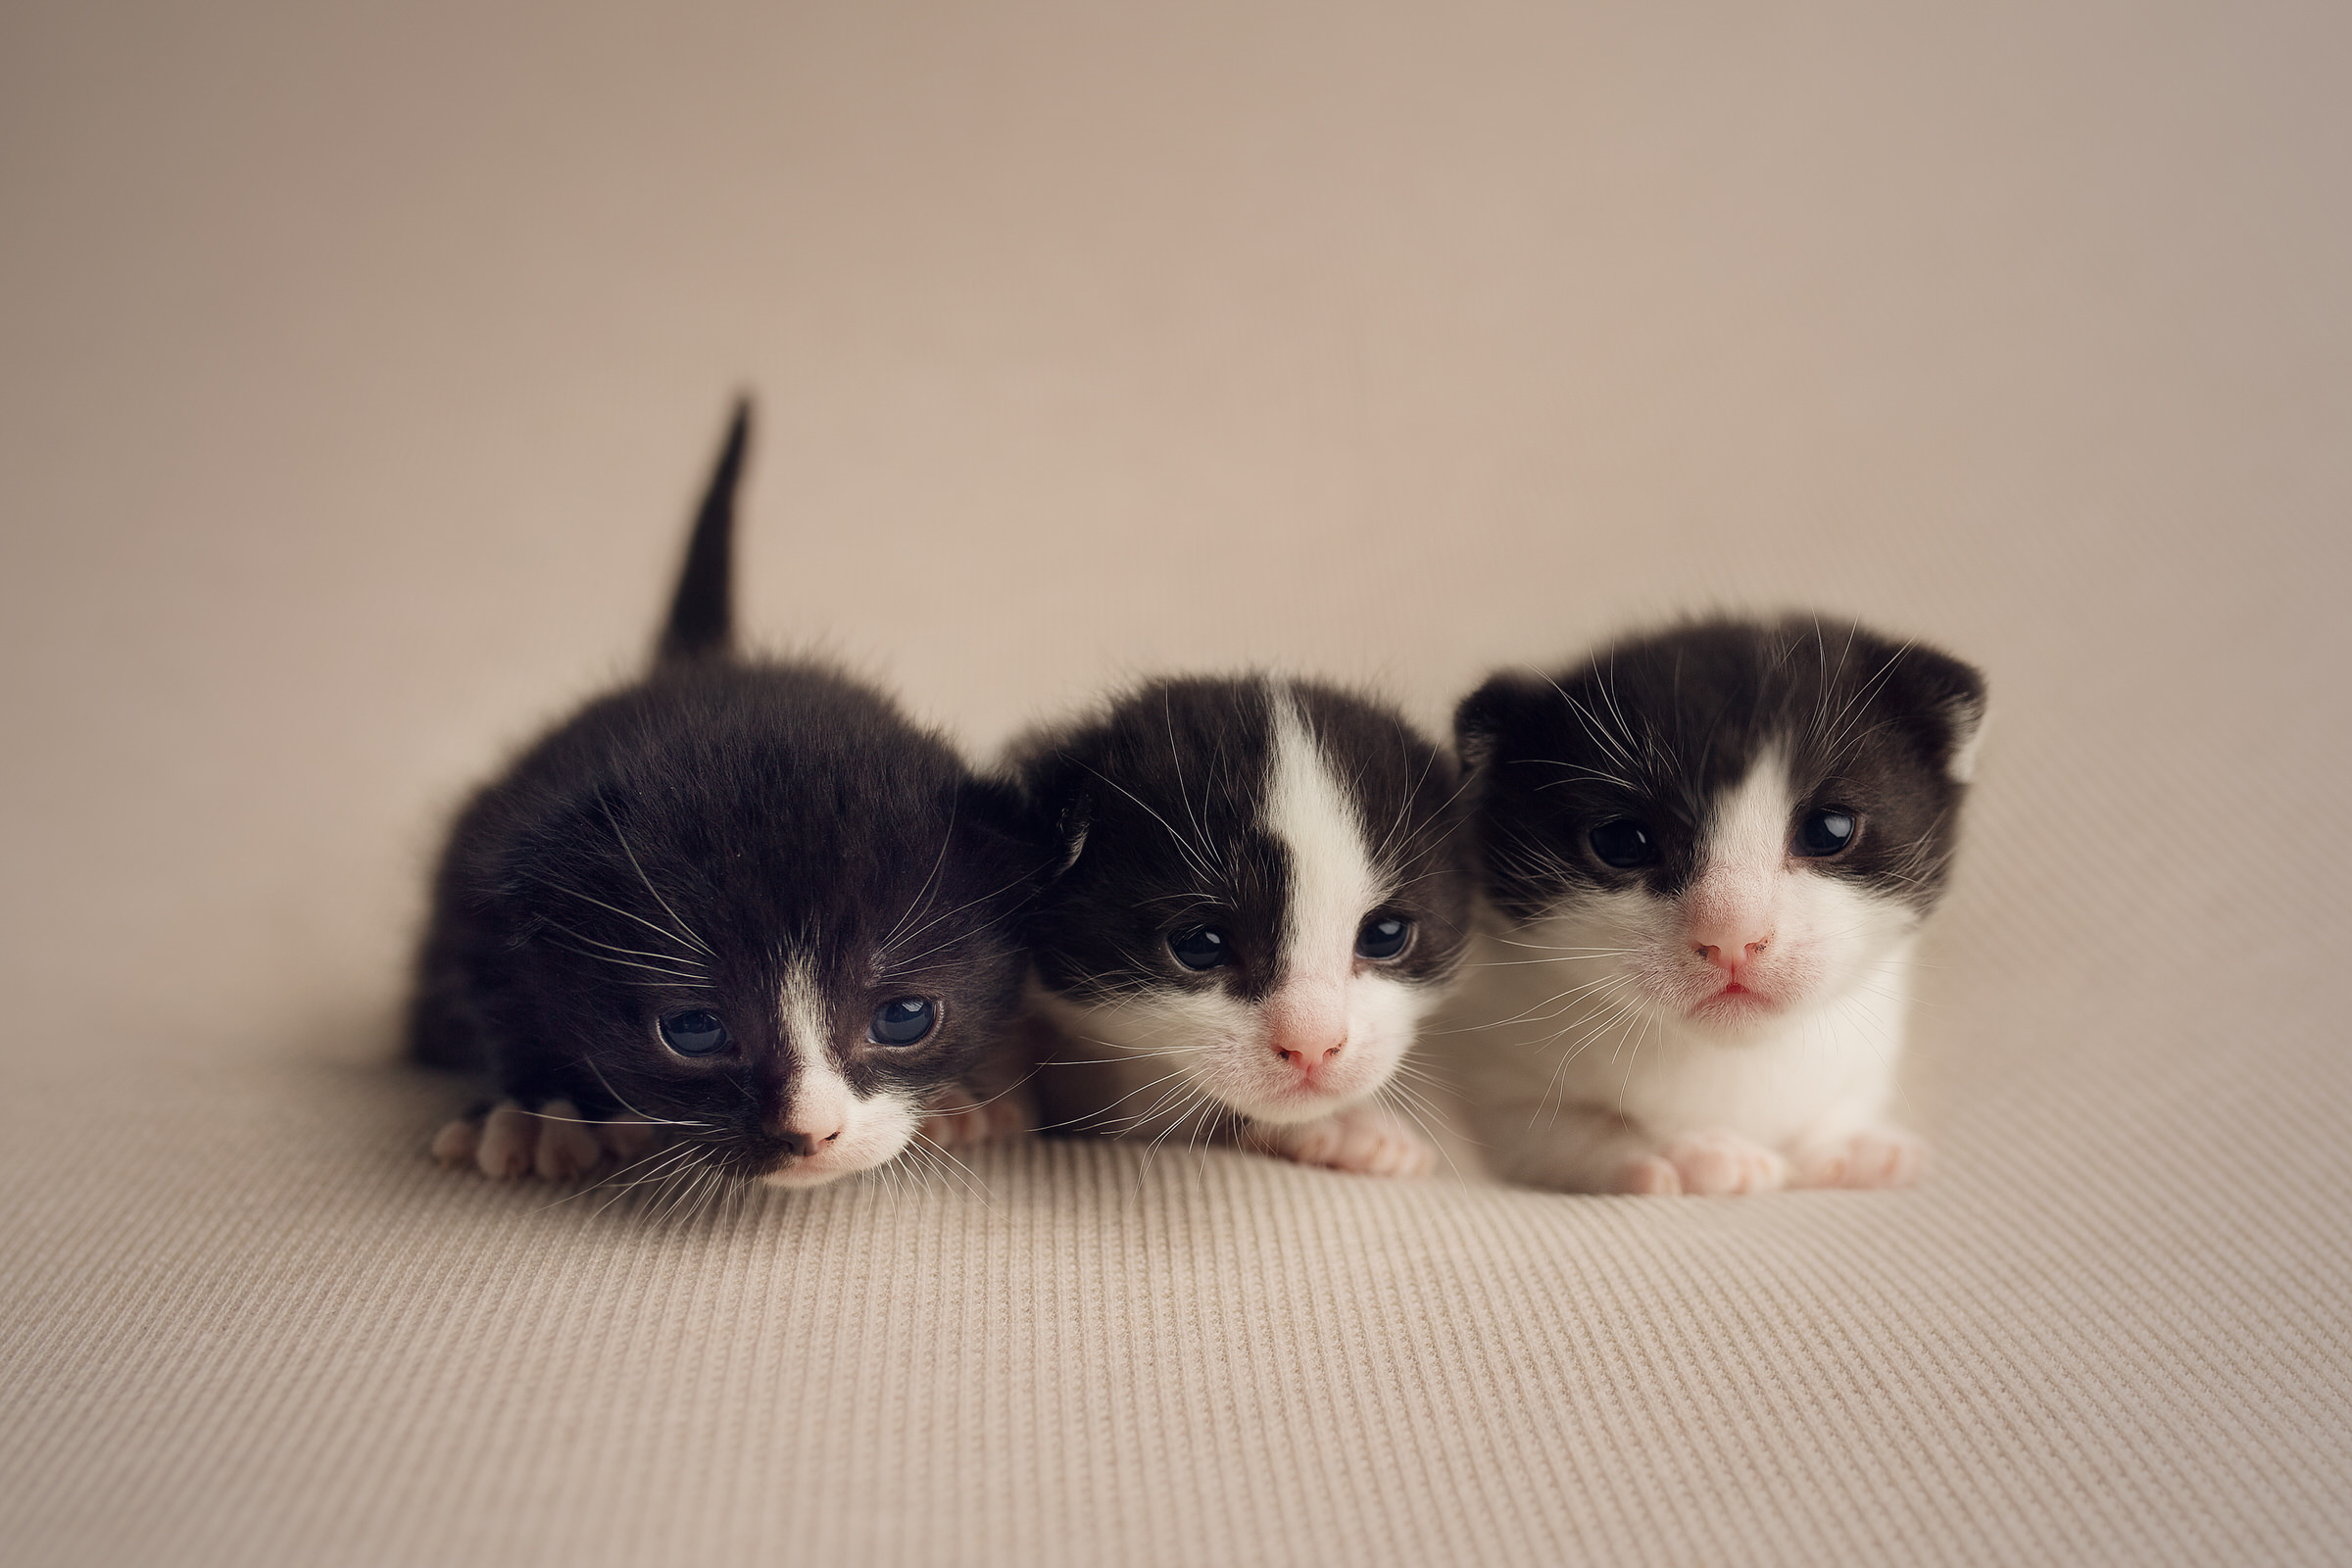 Rescue Kittens baby photographer Essex